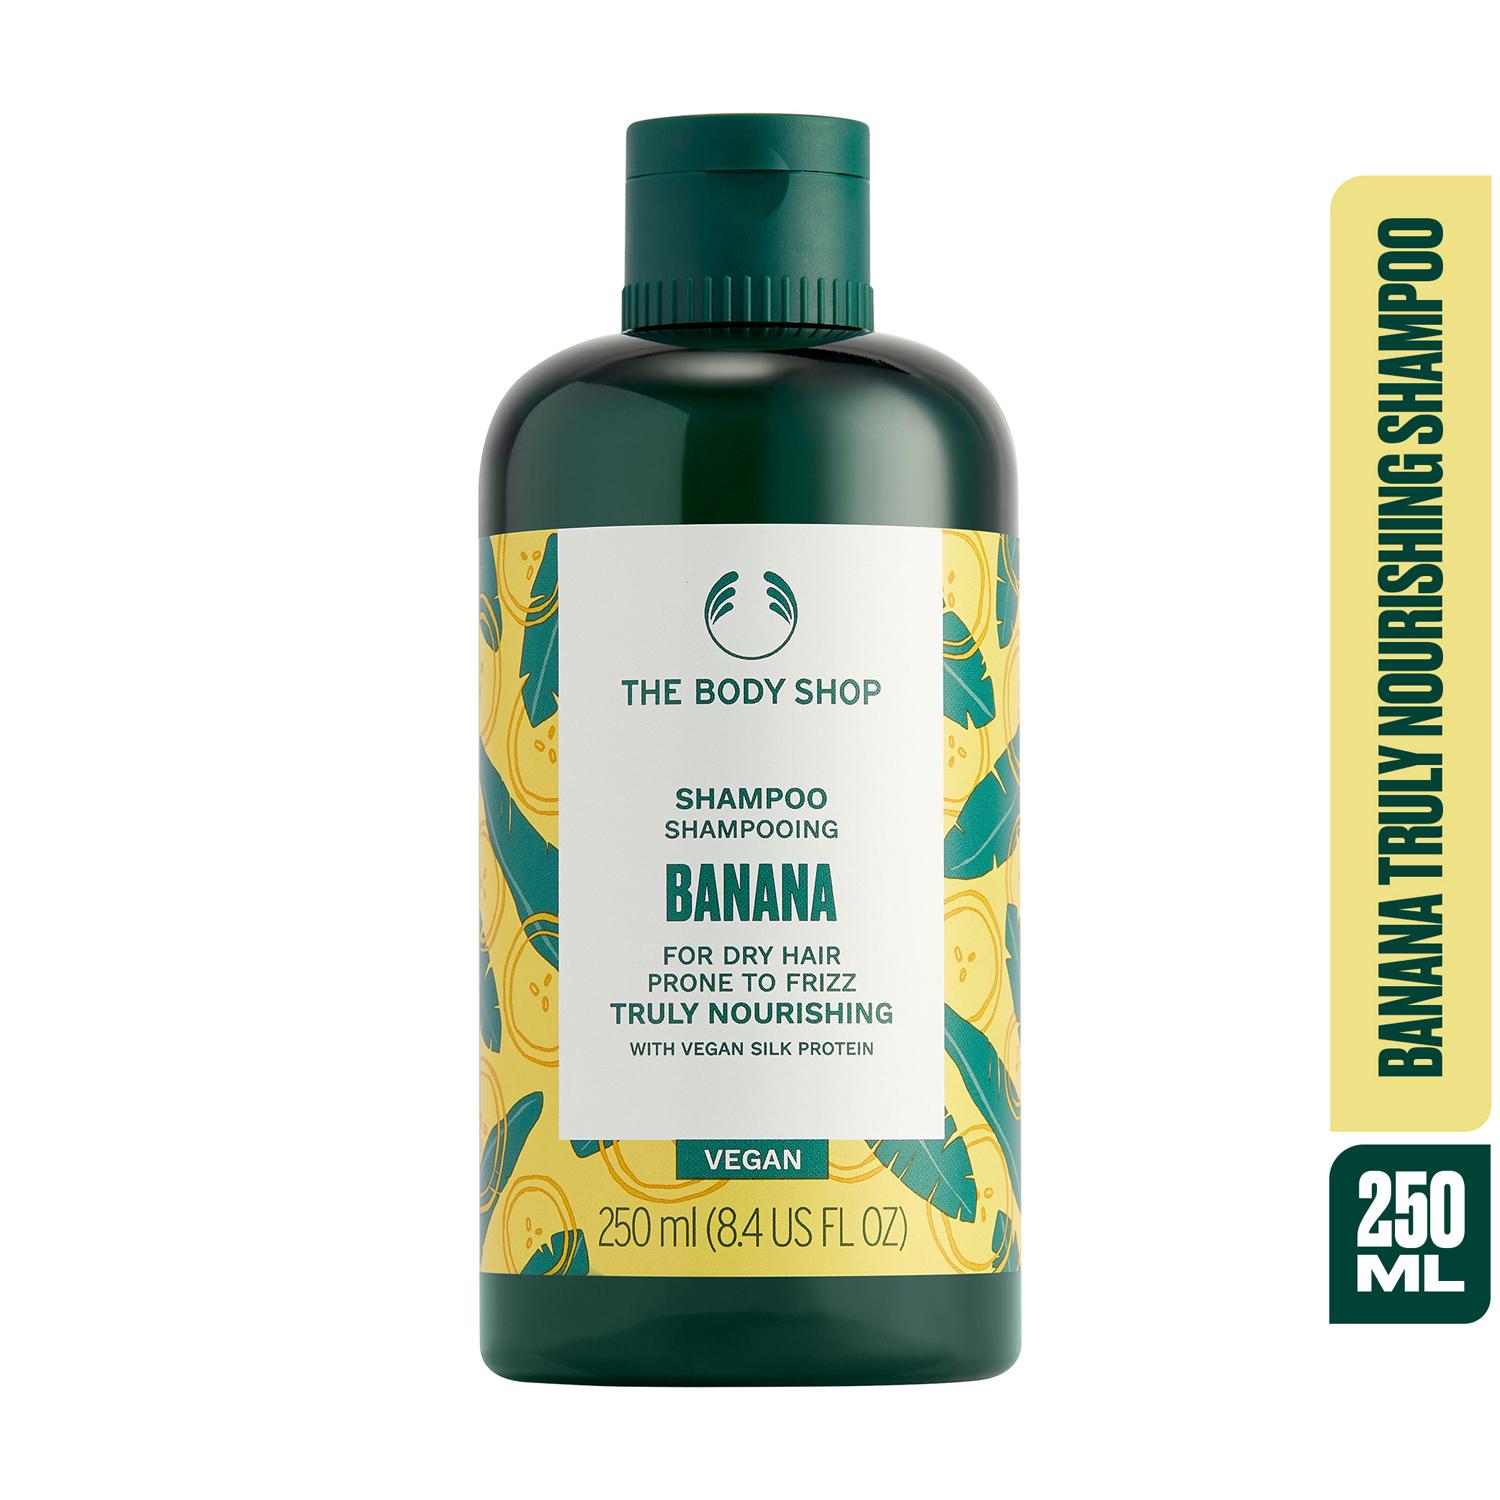 The Body Shop | The Body Shop Banana Shampoo (250ml)